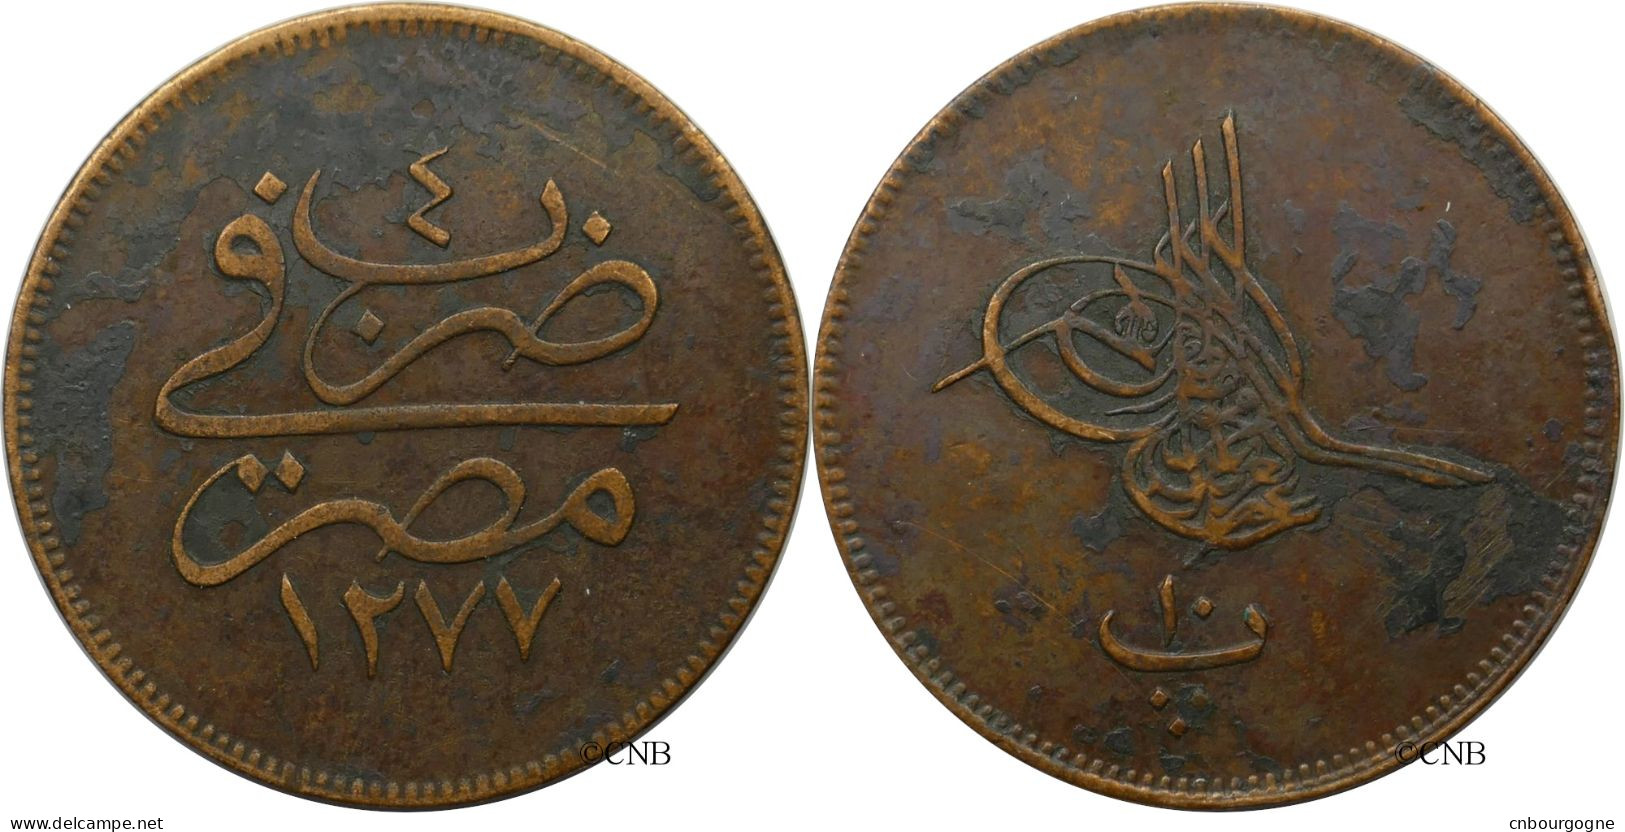 Égypte - Empire Ottoman - Abdulaziz - 10 Para AH1277/4 (1863) - TTB/XF40 - Mon6034 - Egitto